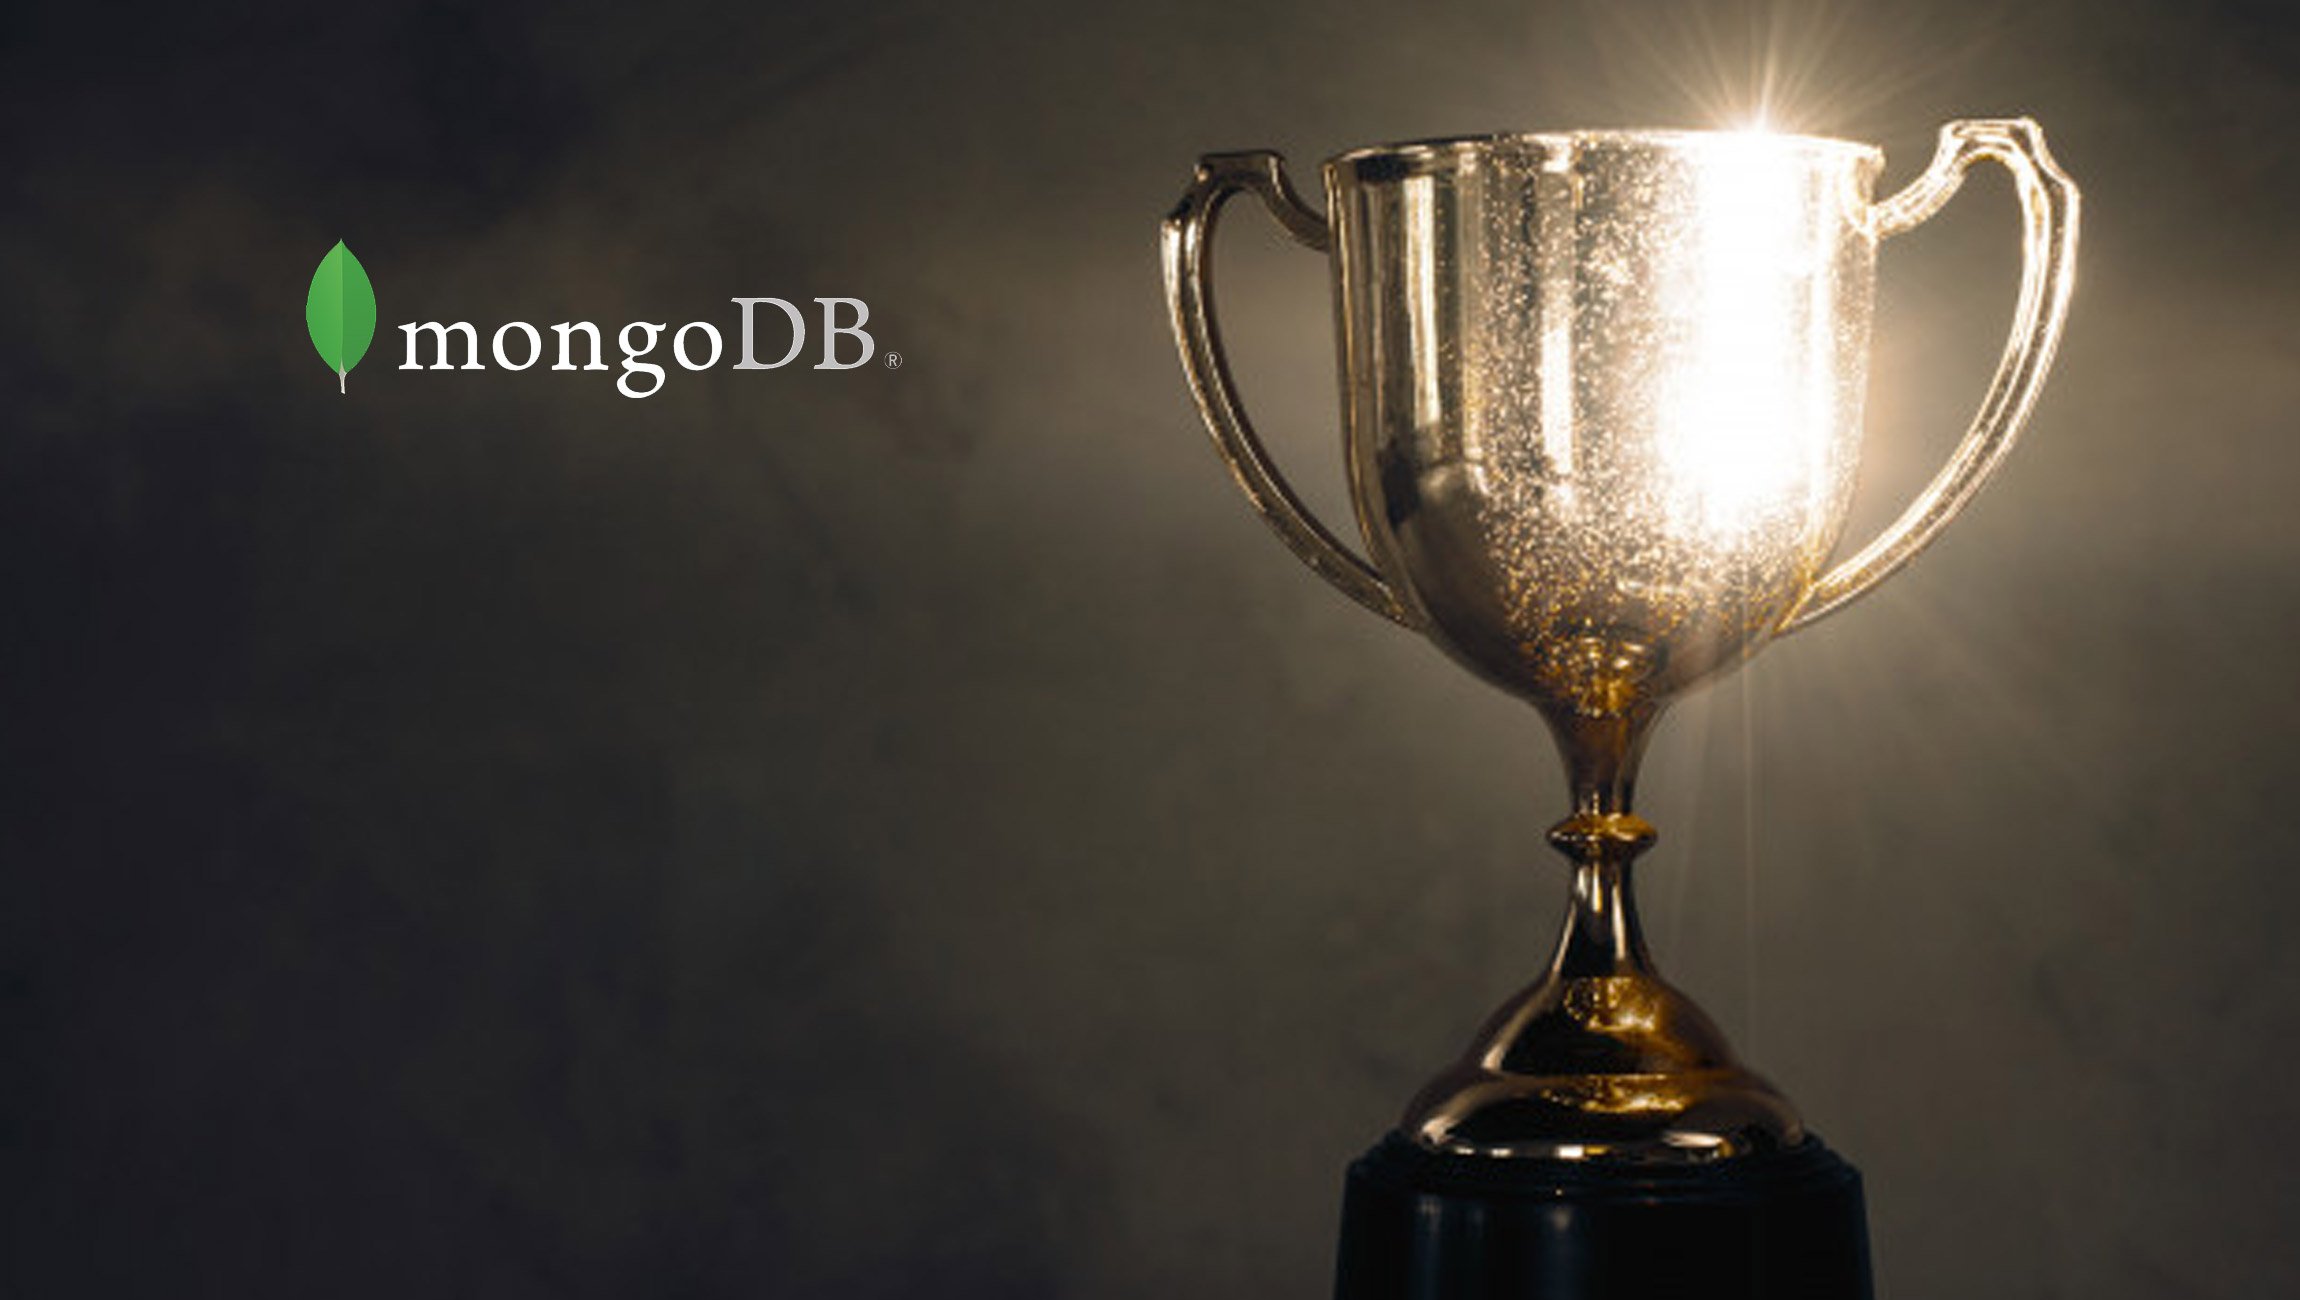 Sixth Annual MongoDB Innovation Award Winners Announced